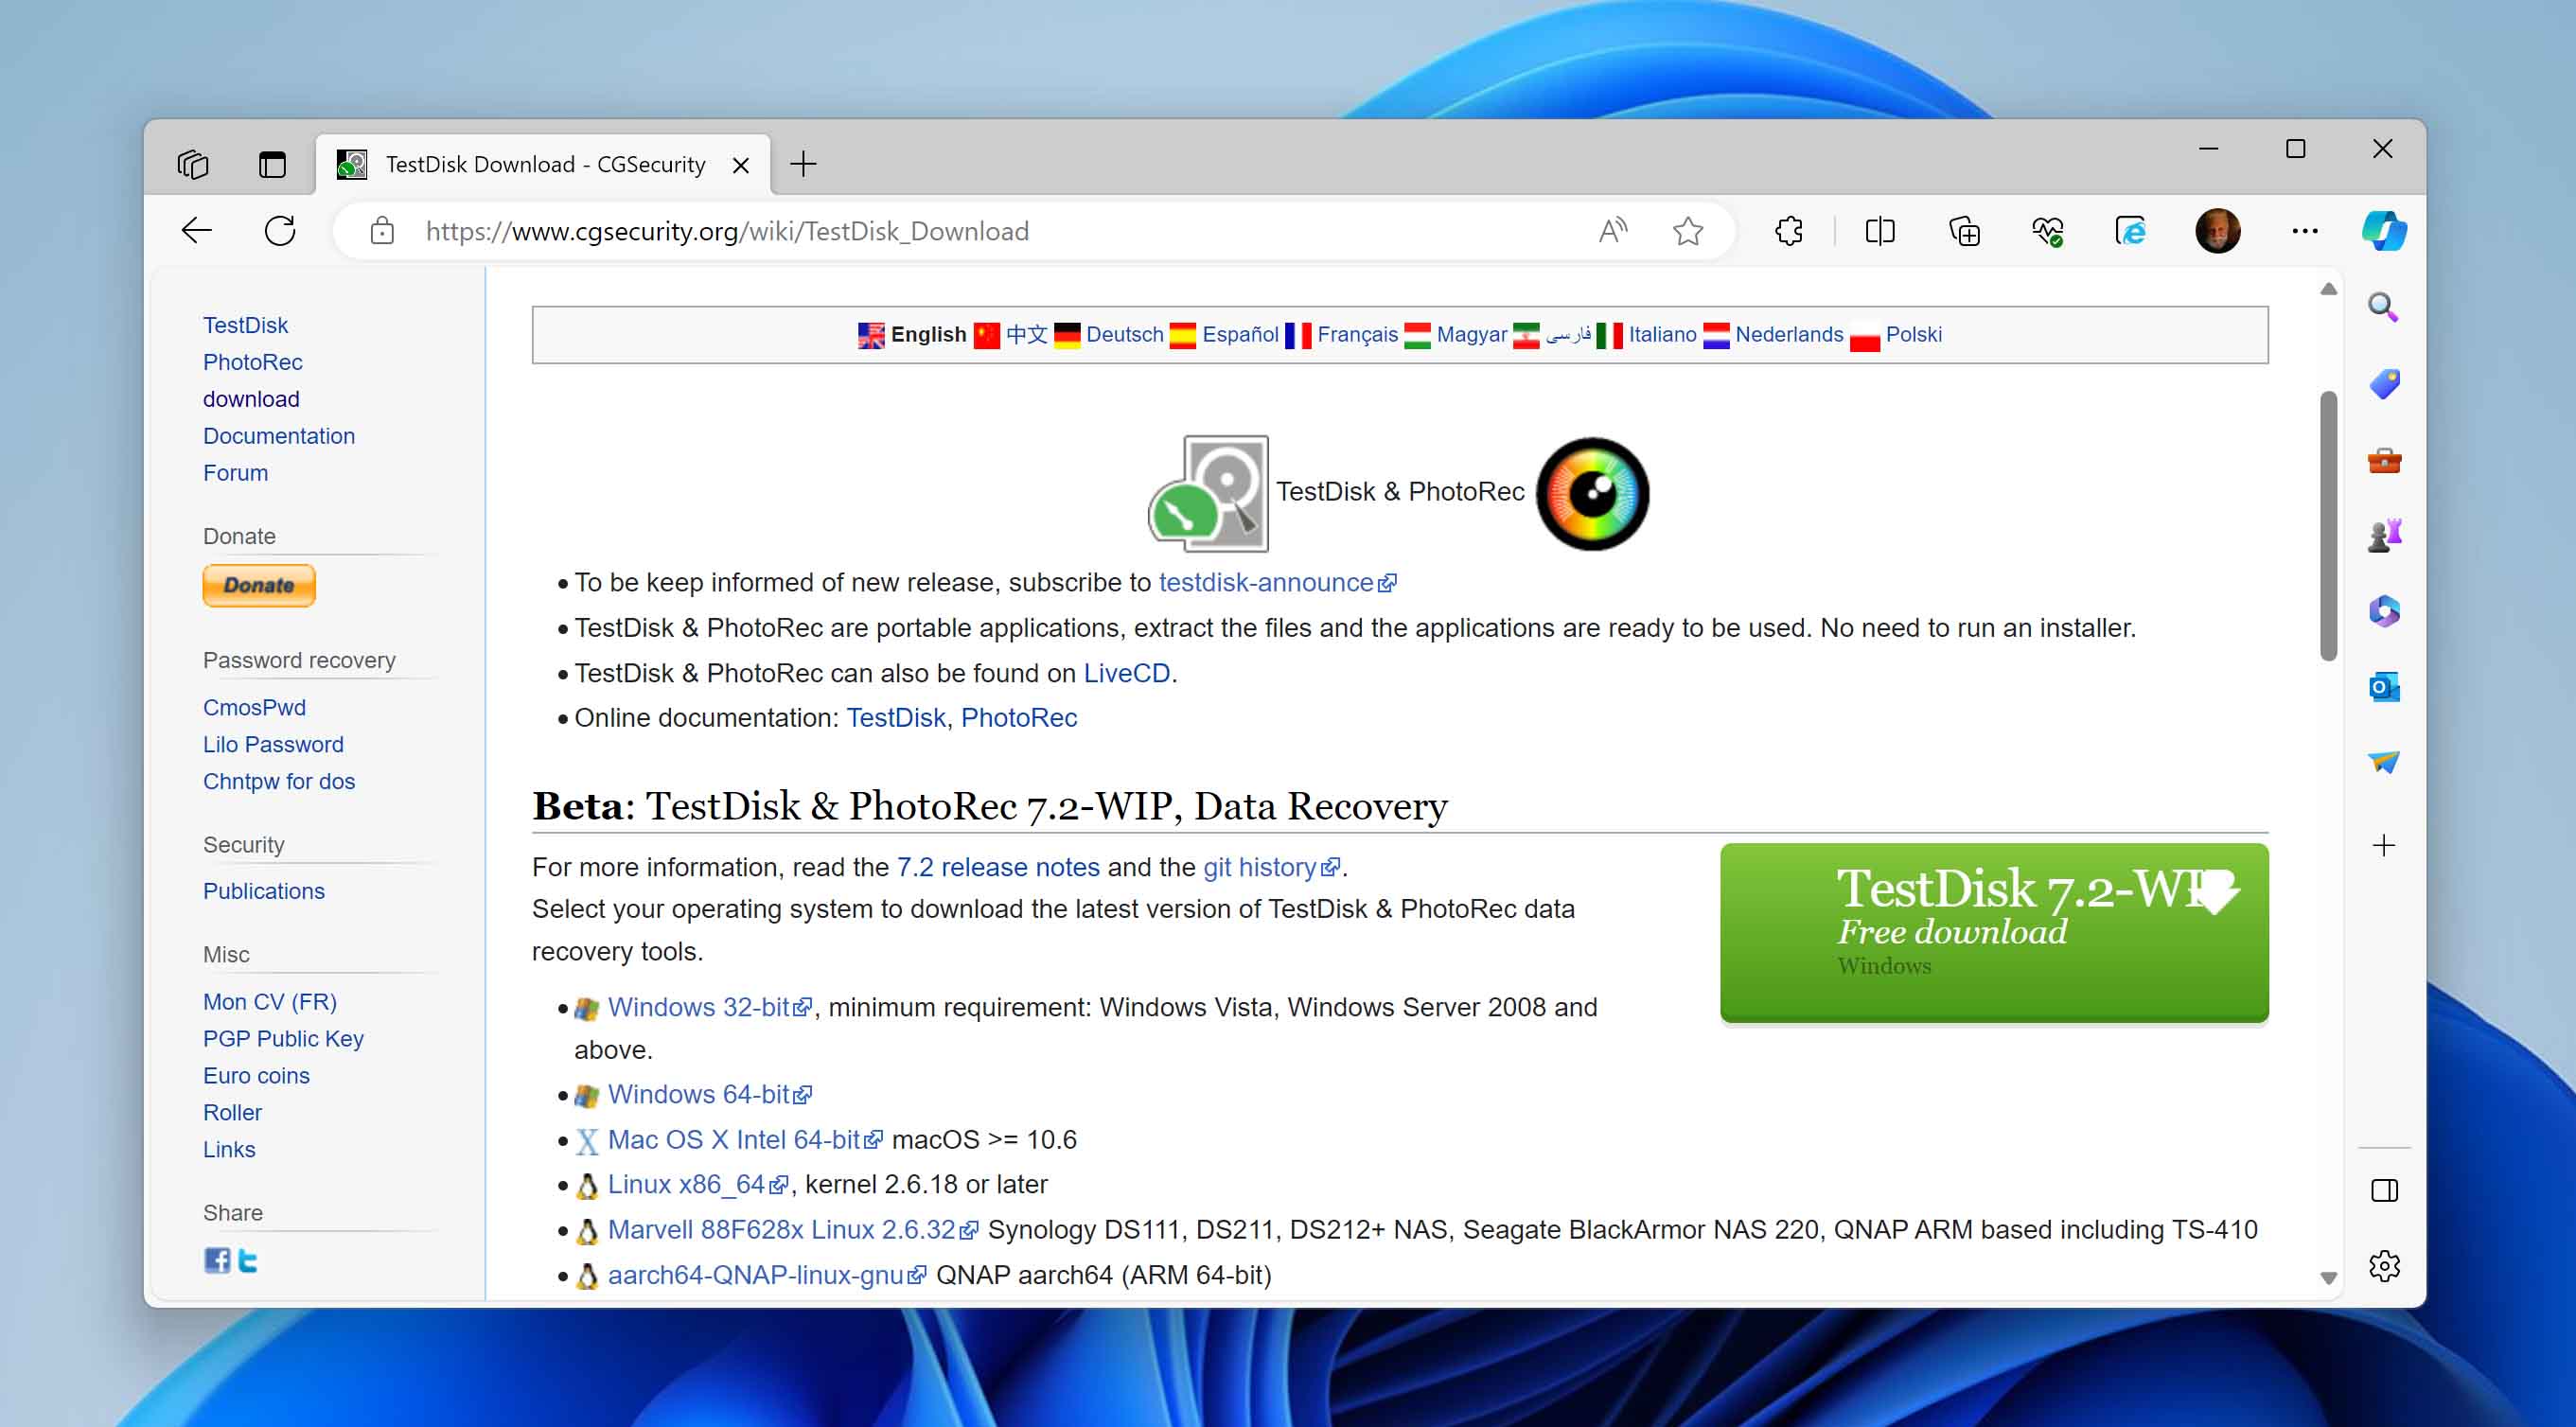 testdisk download button in testdisk website